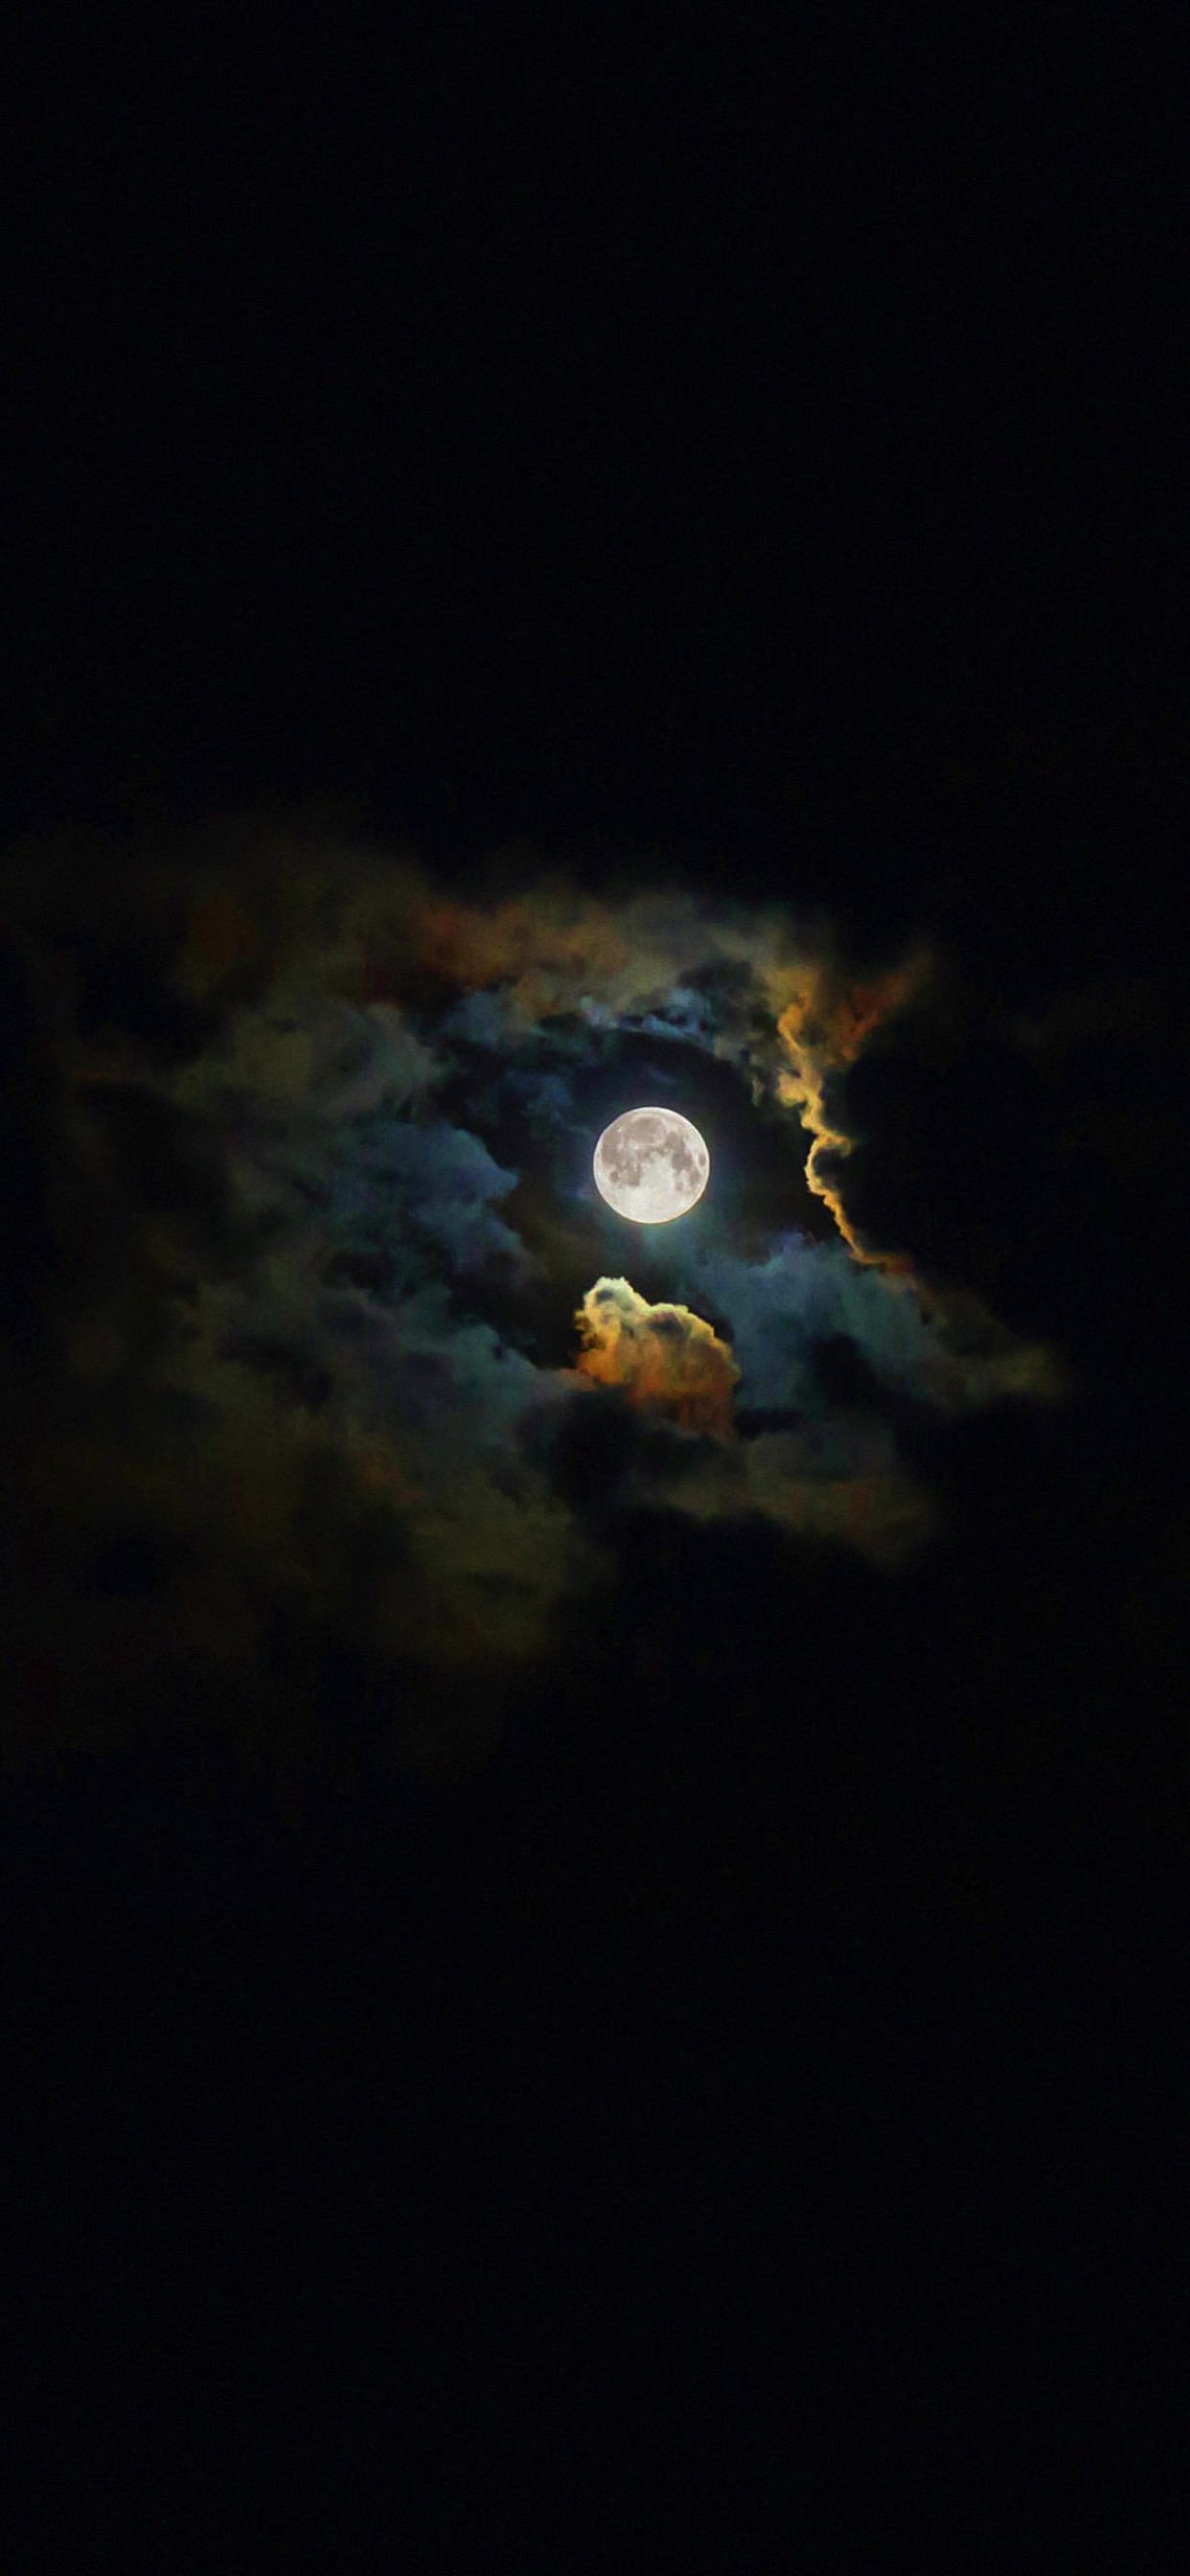 Landscape moon shiny black | wallpaper.sc iPhone XS Max